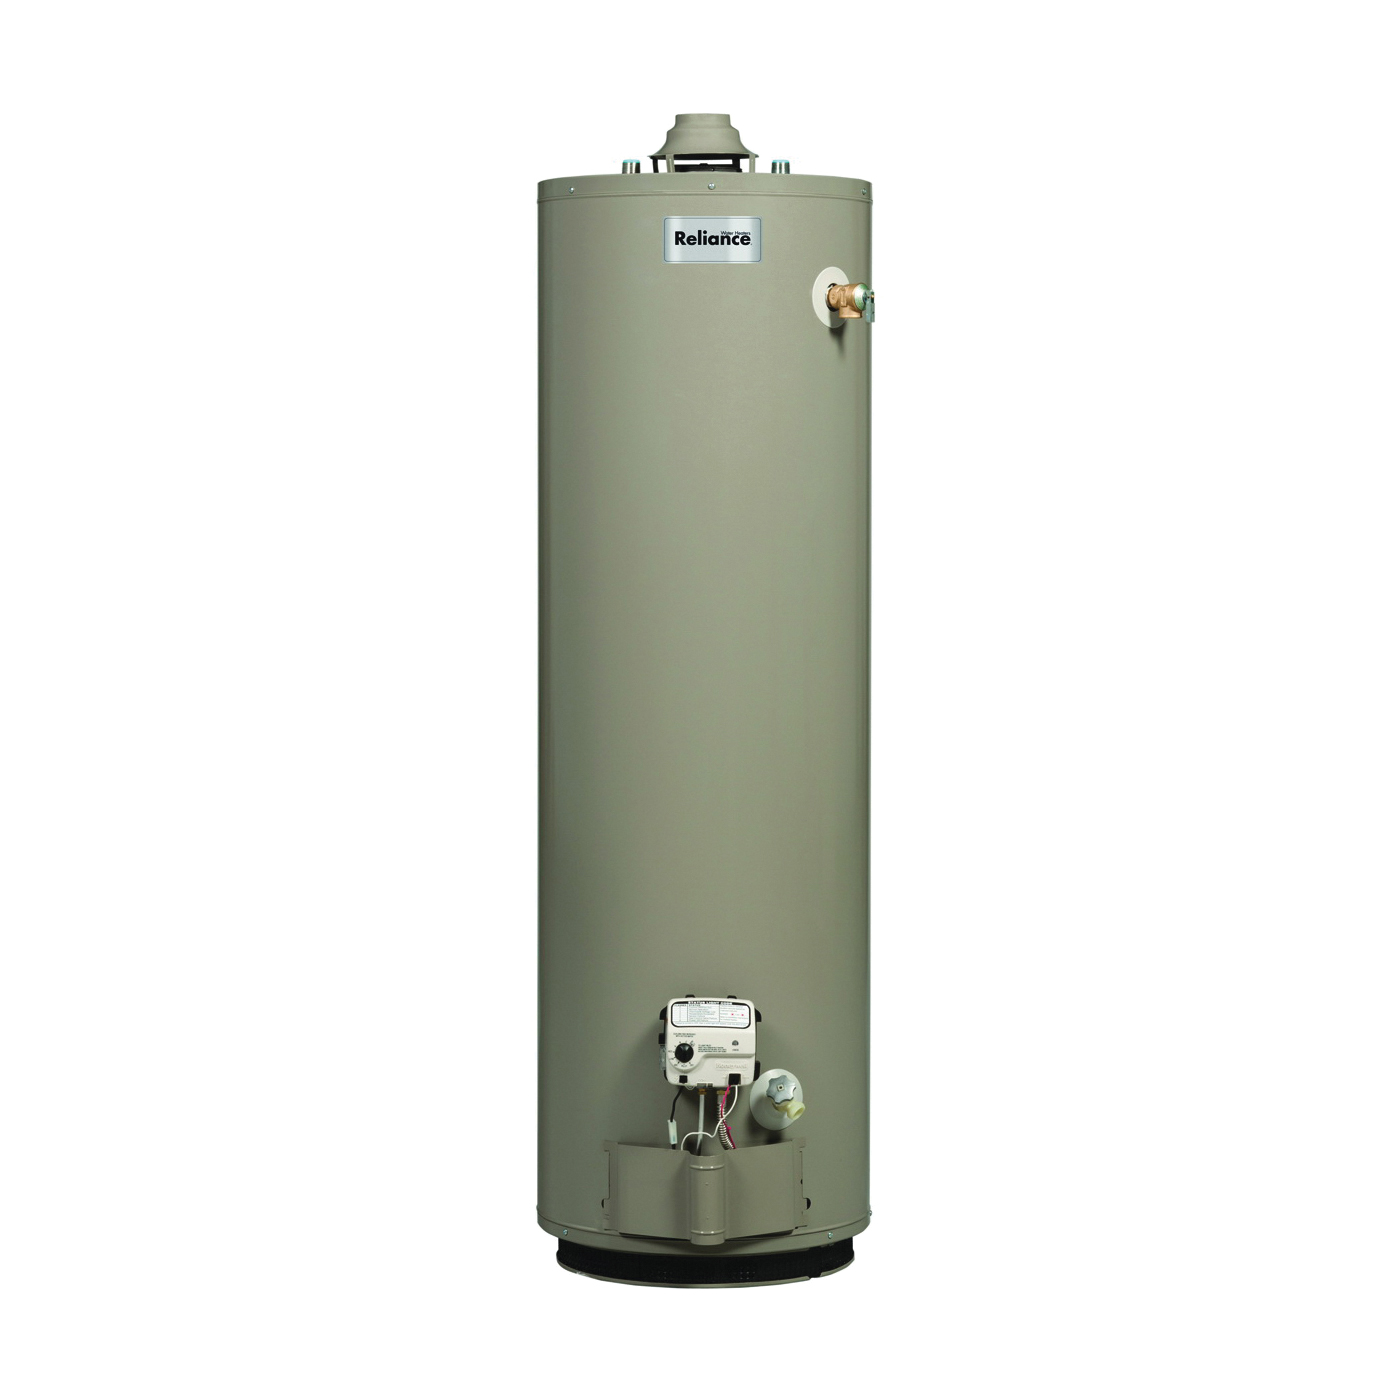 6 30 NOCT Gas Water Heater, Natural Gas, 30 gal Tank, 69 gph, 35500 Btu BTU, 0.6 Energy Efficiency